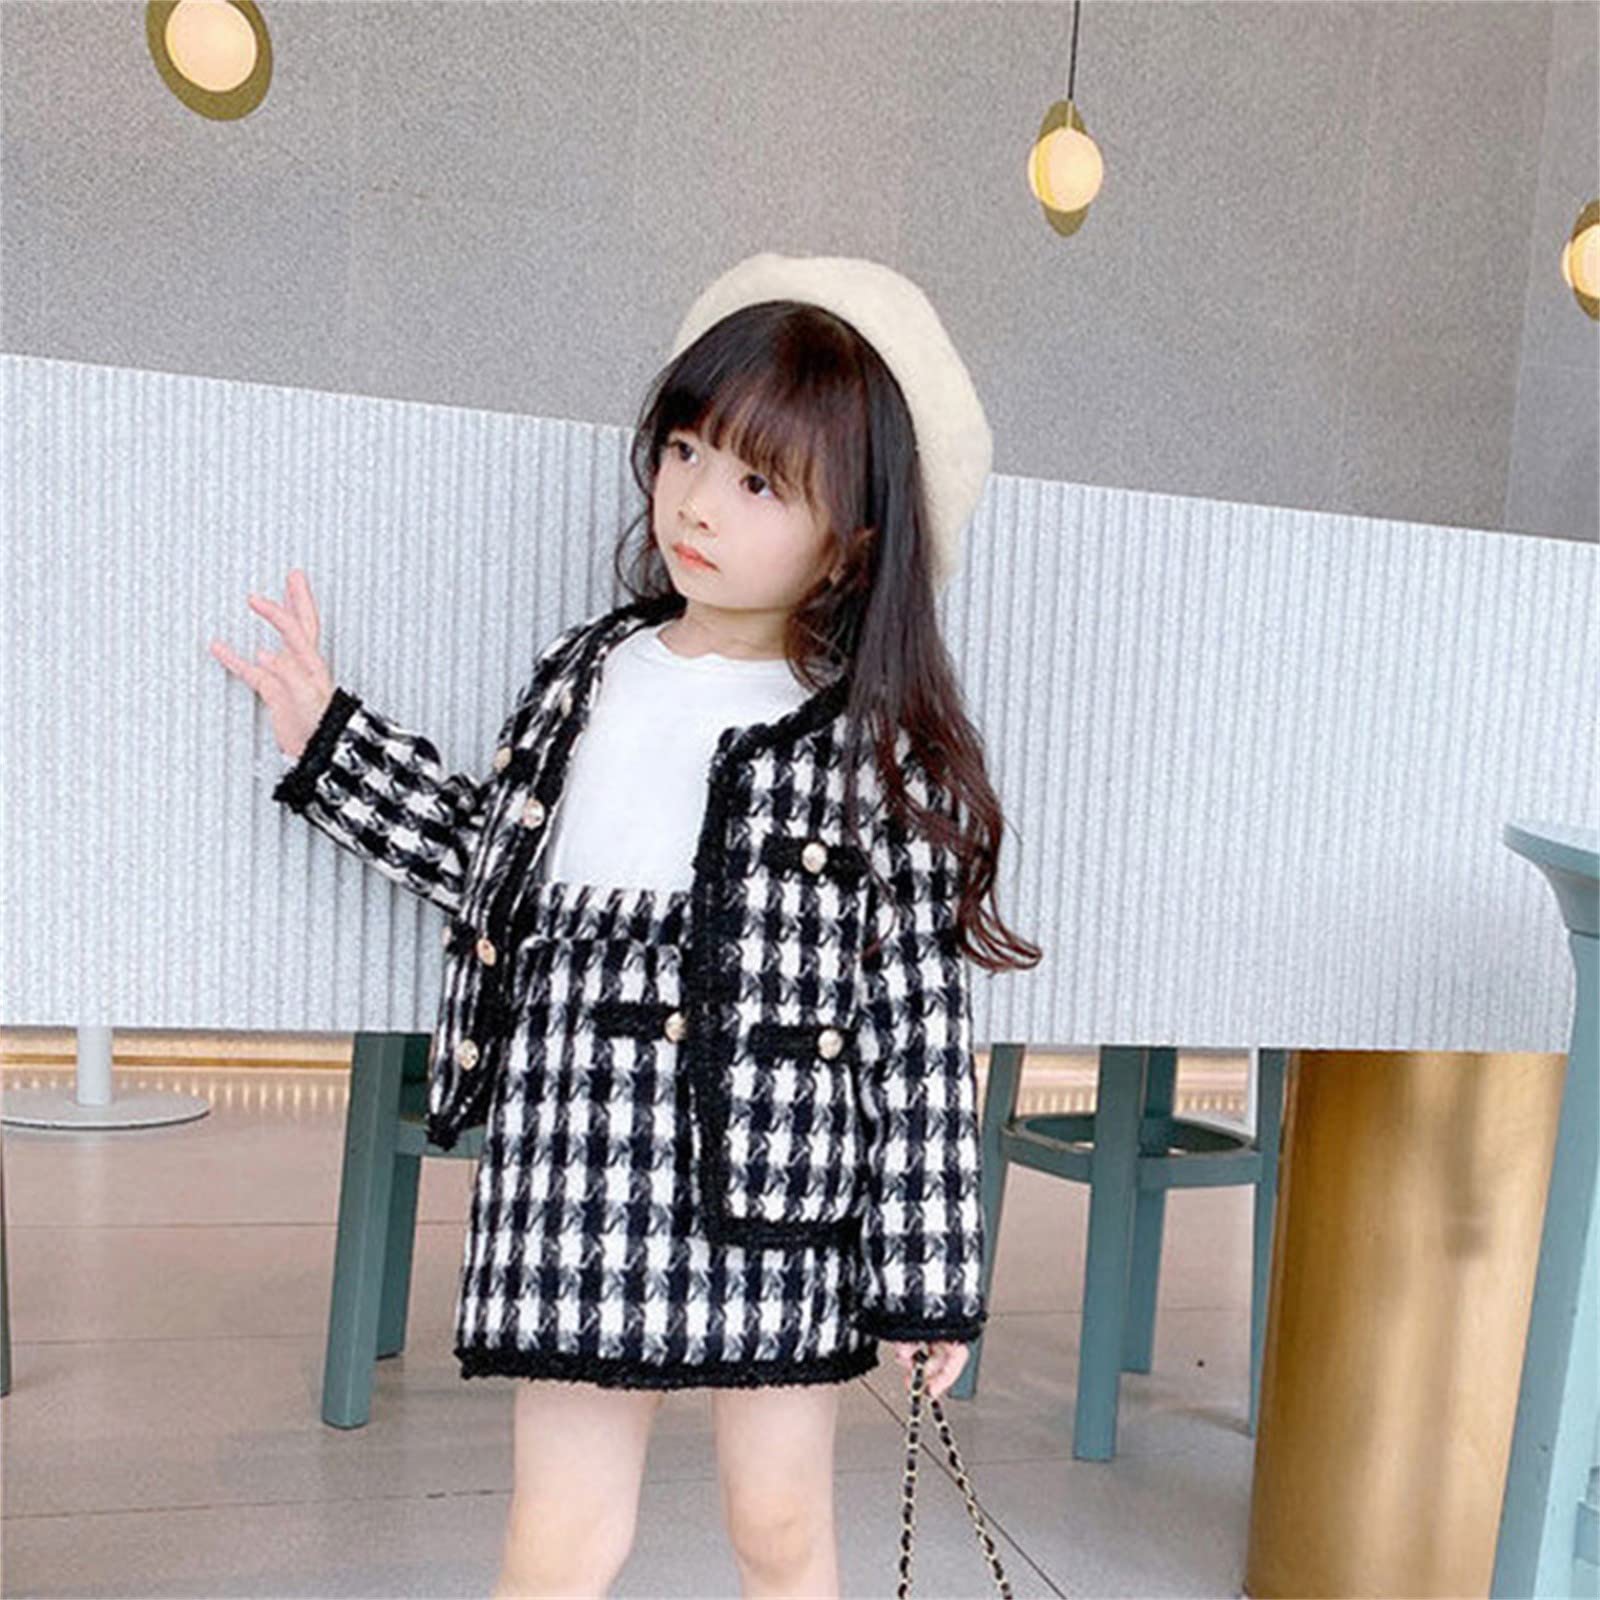 Teen Clothes for Girls Children Kids Toddler Infant Baby Girls Long Sleeve Patchwork Coat Toddler (Black, 18-24 Months)